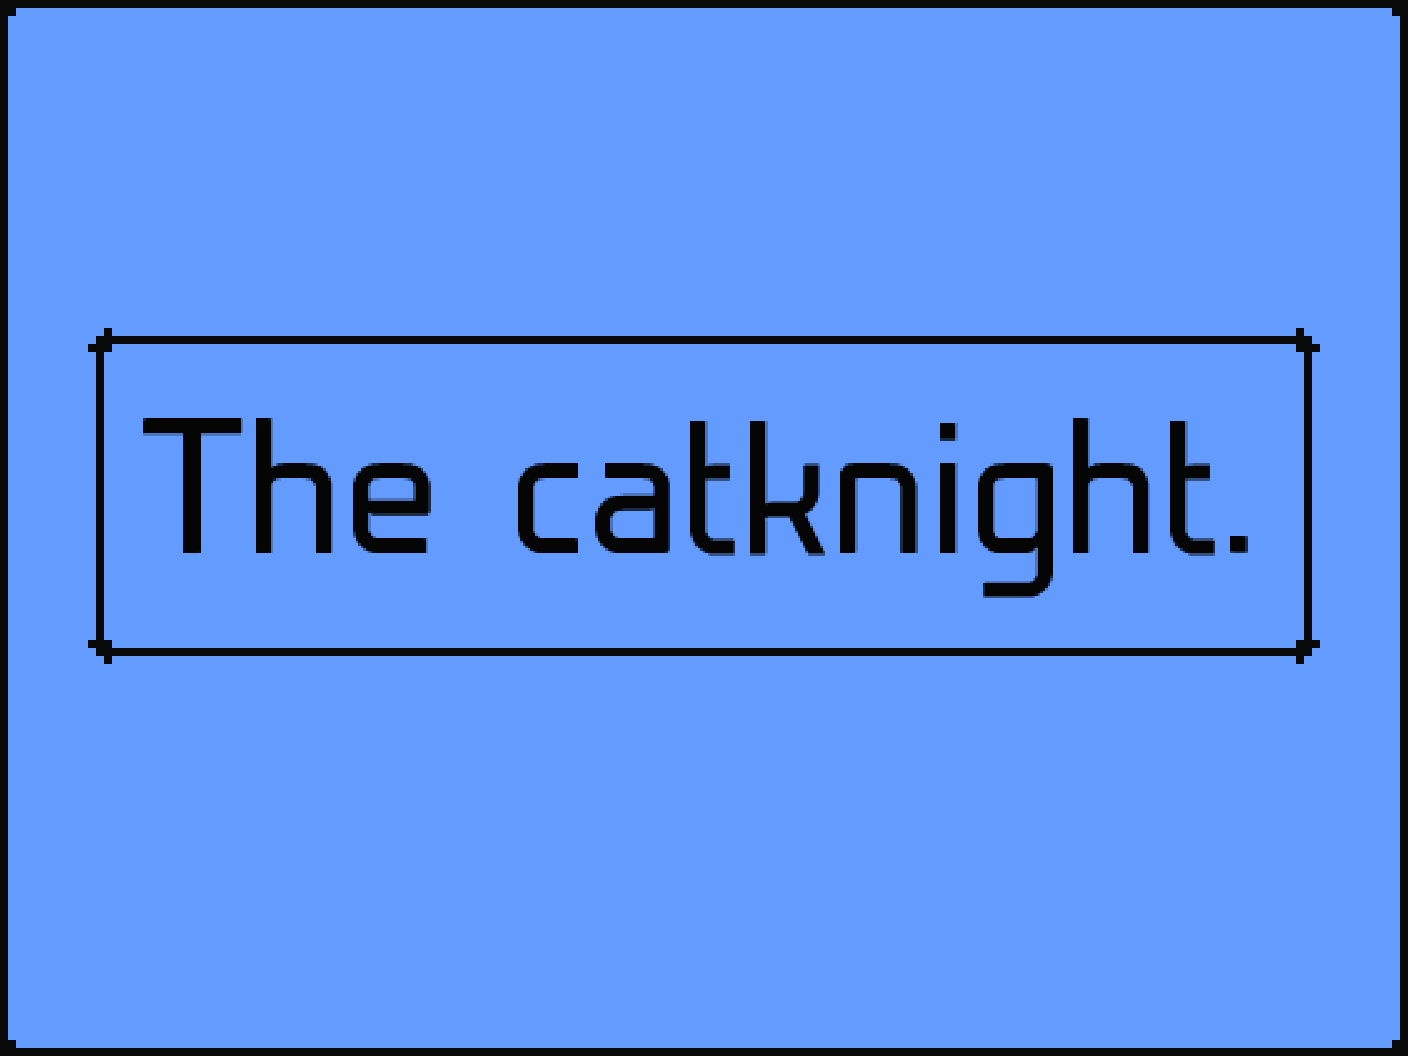 The catknight